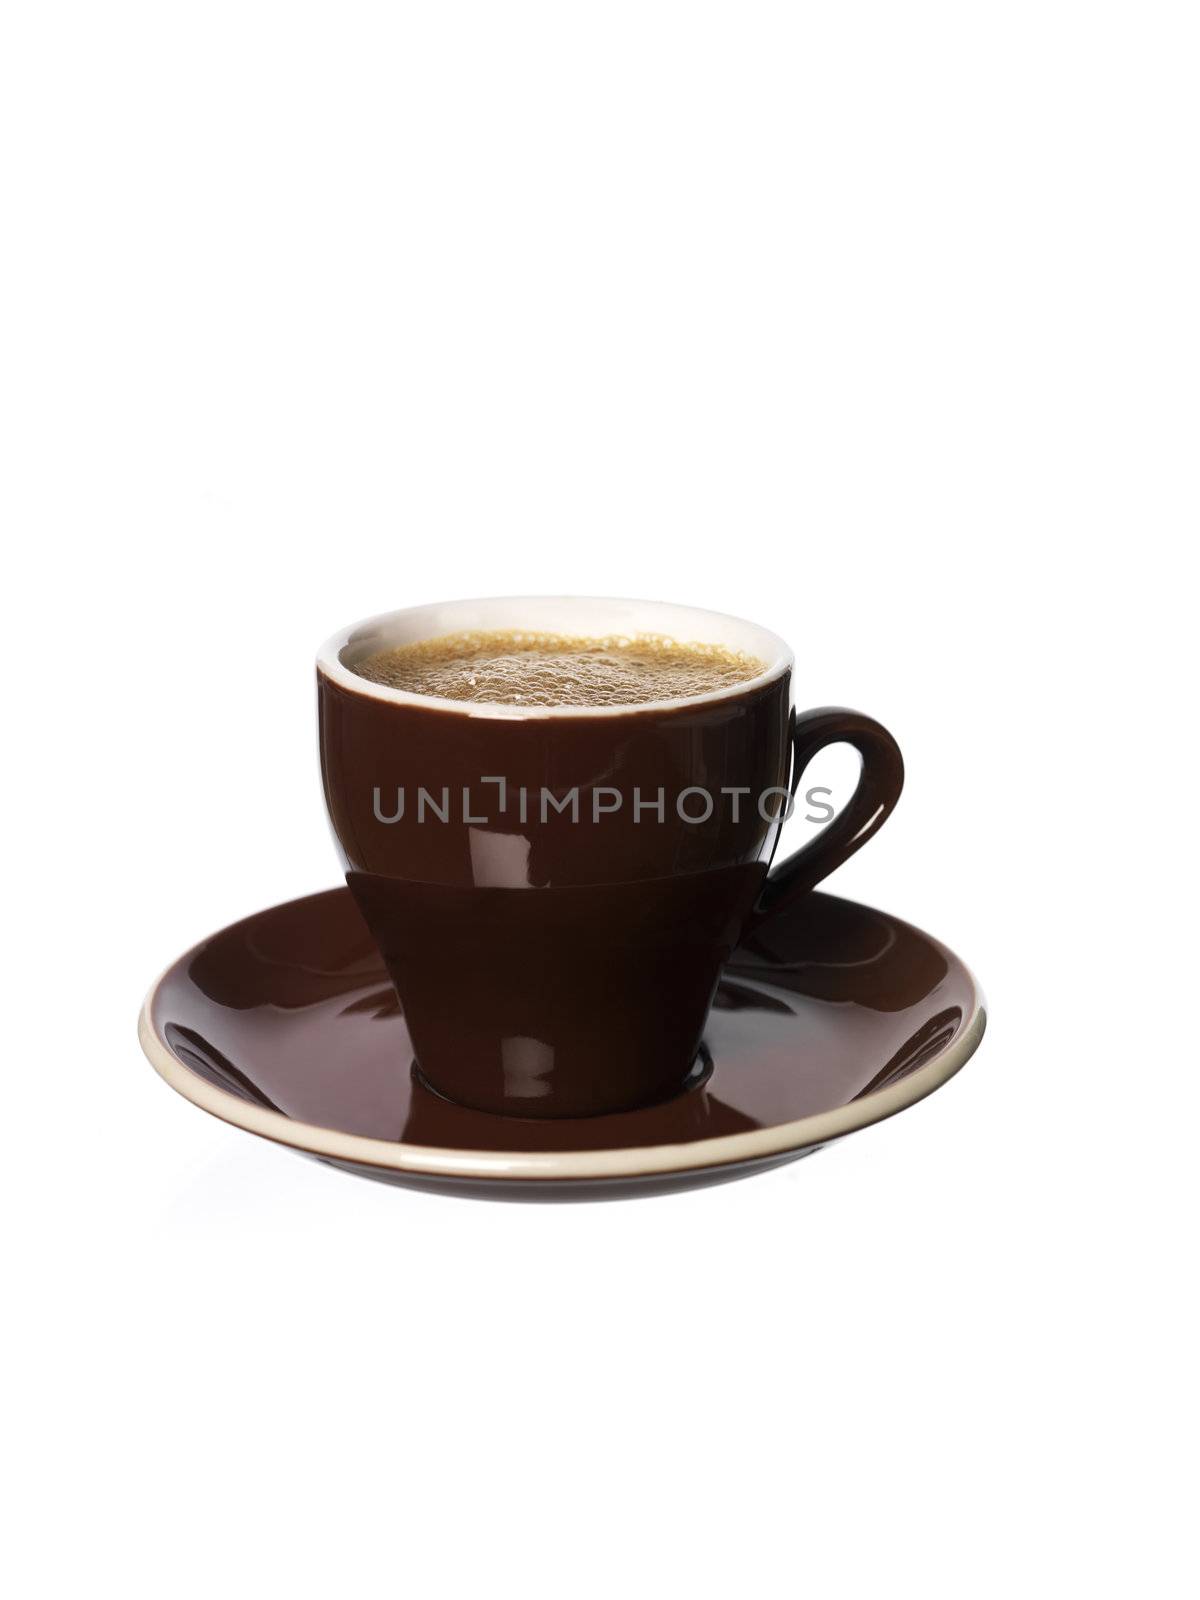 Cup of coffee by gemenacom